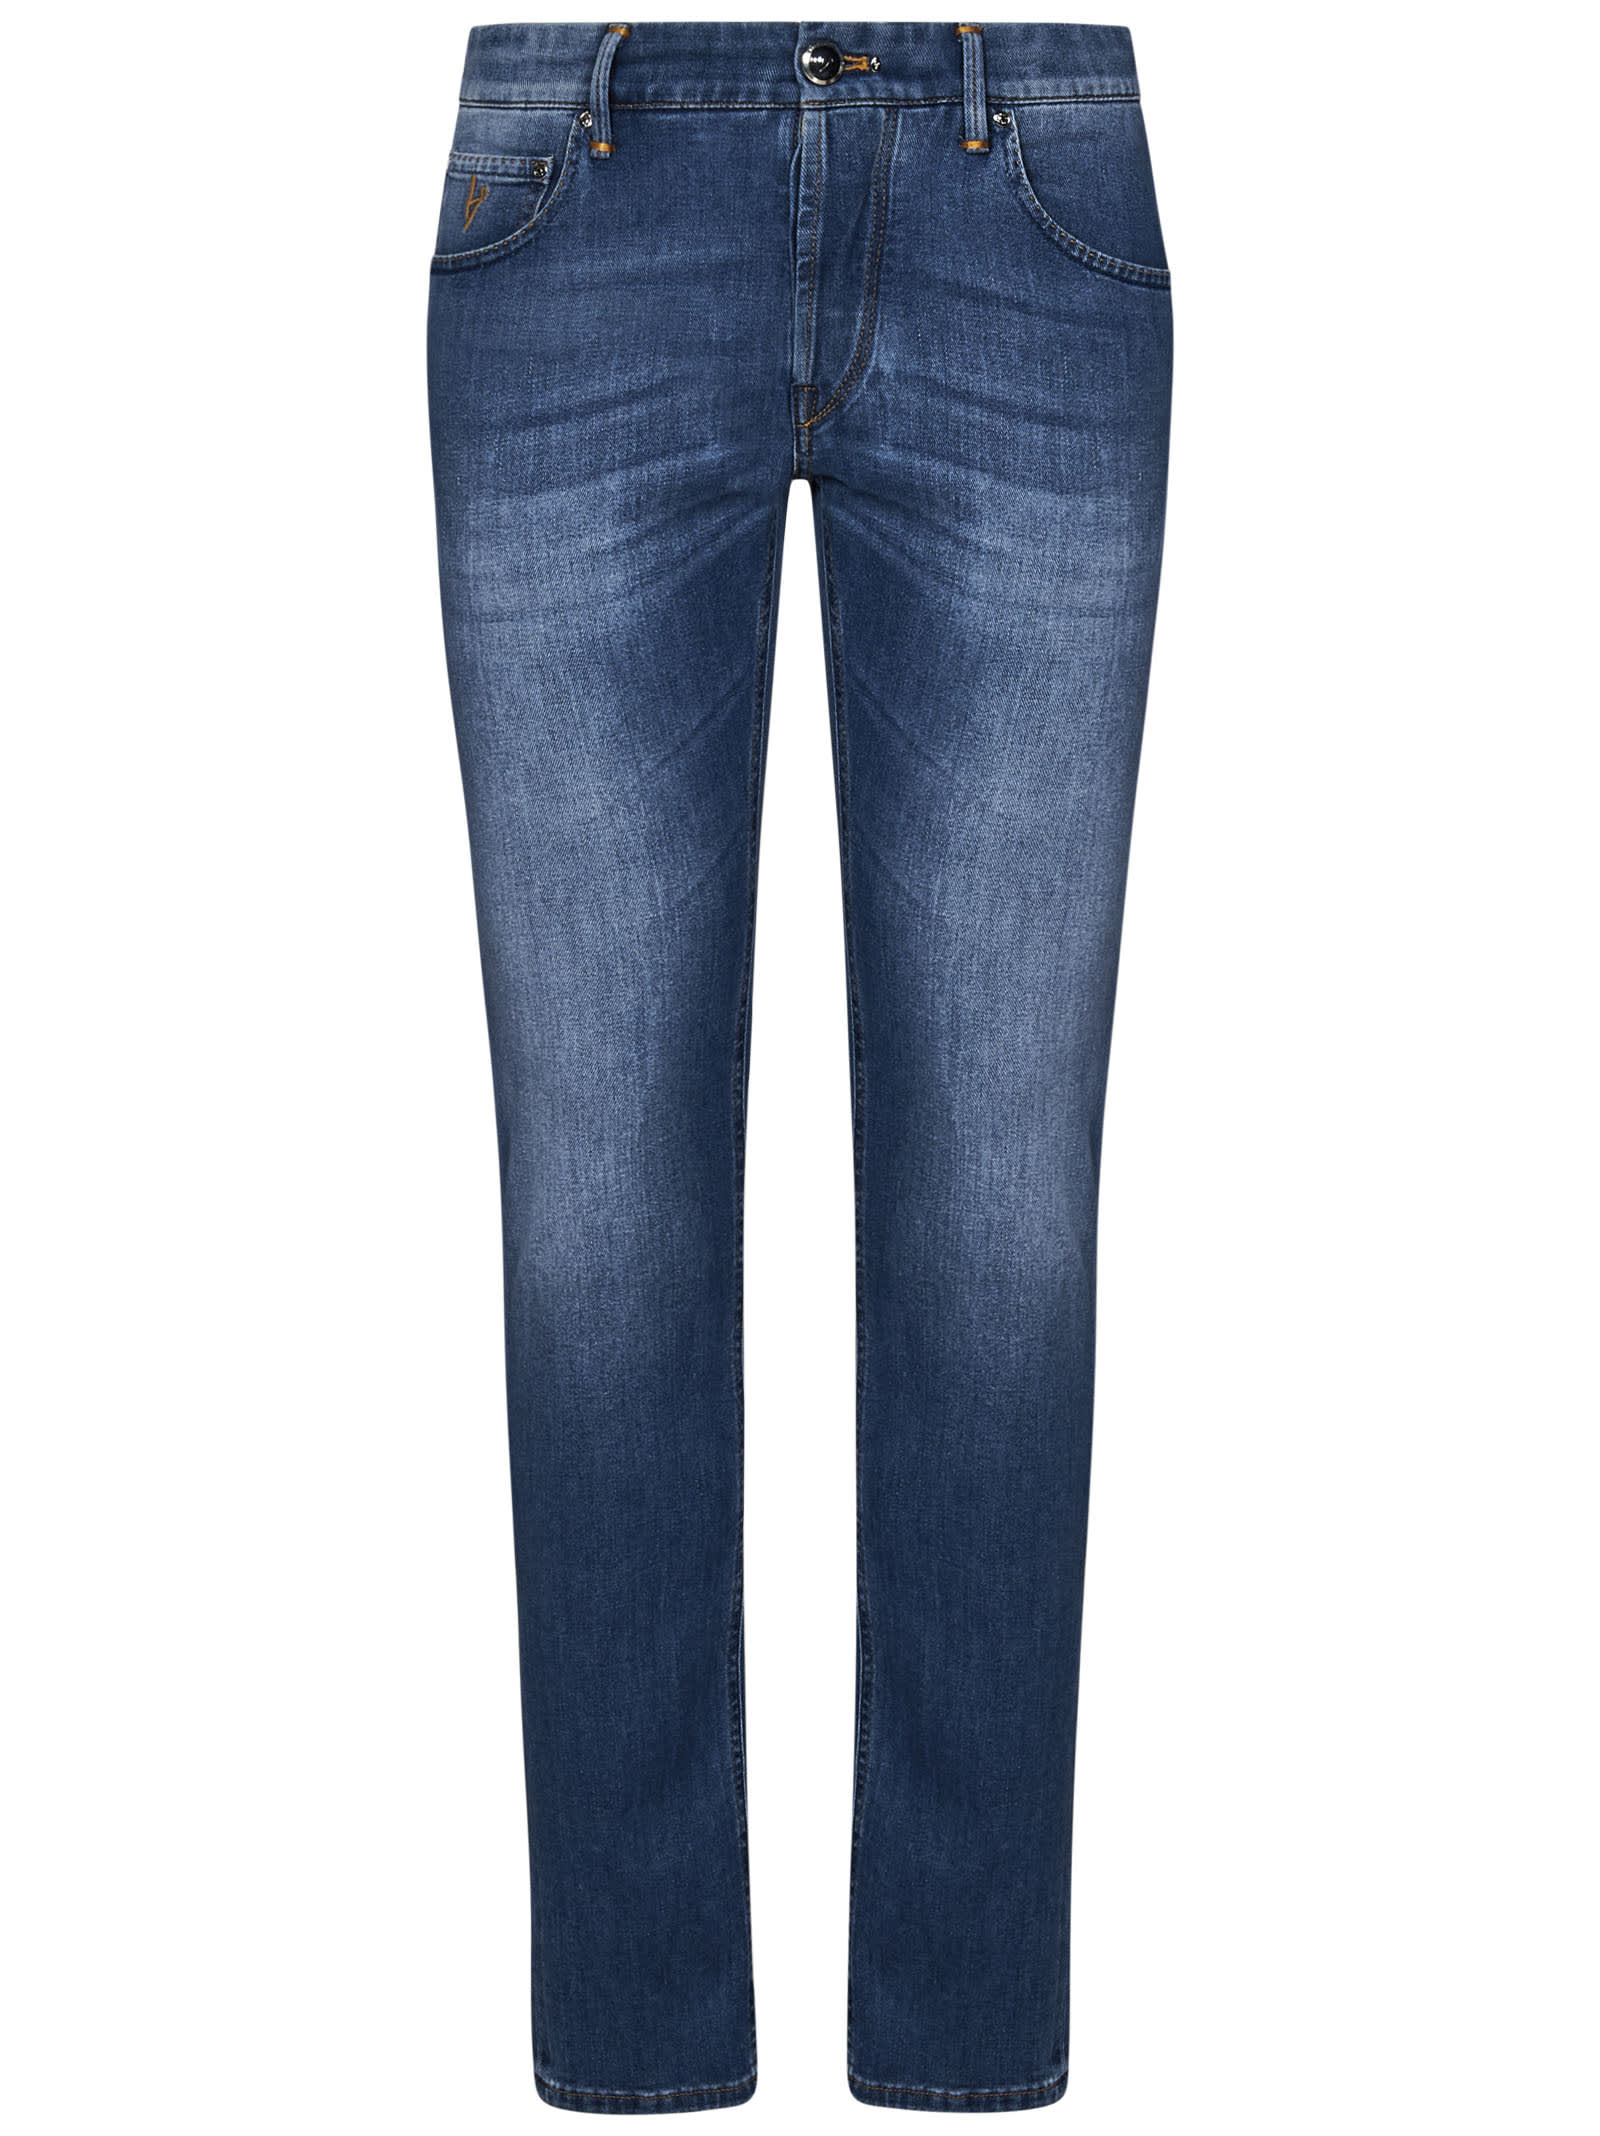 Handpicked Orvieto Jeans